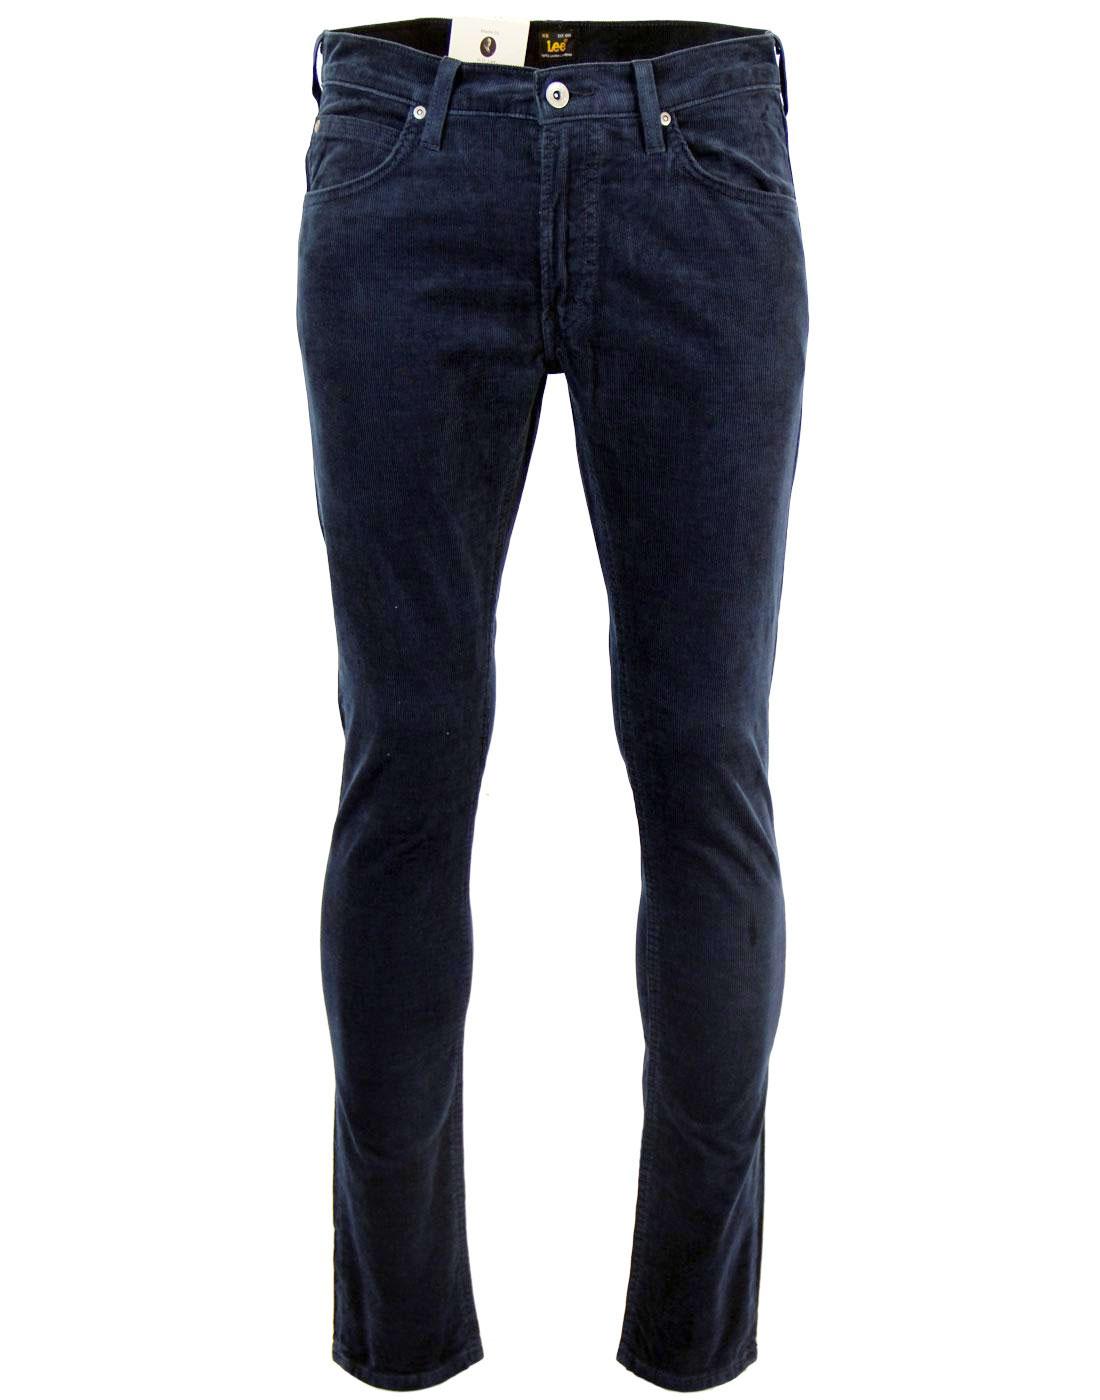 Luke LEE Retro Mod Slim Tapered Cord Jeans (NAVY)